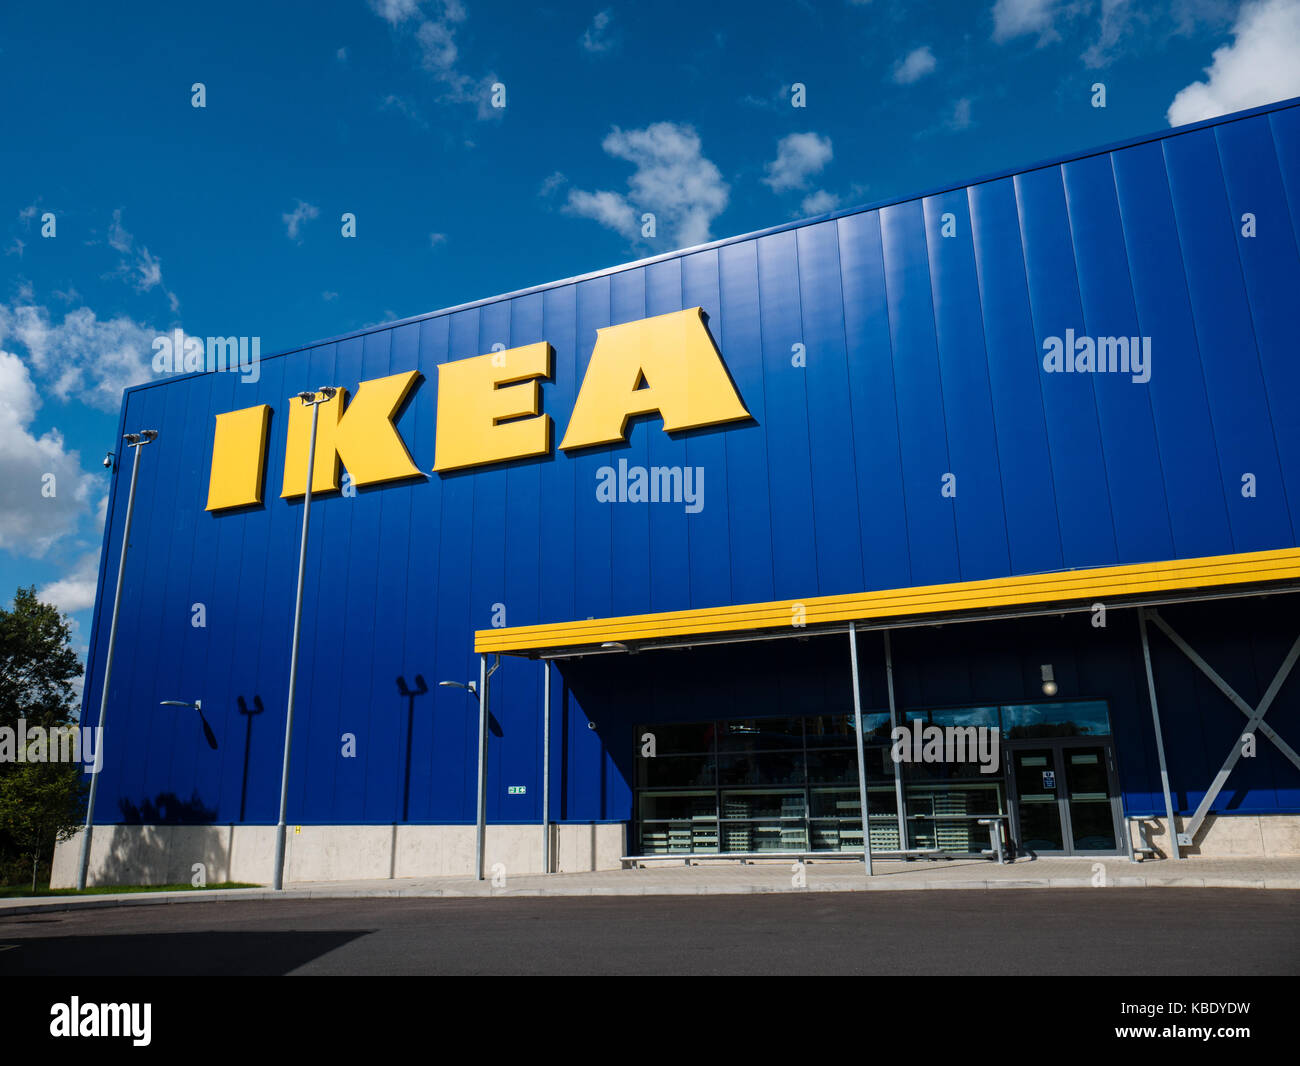 Ikea uk fotografías e imágenes de alta resolución - Alamy